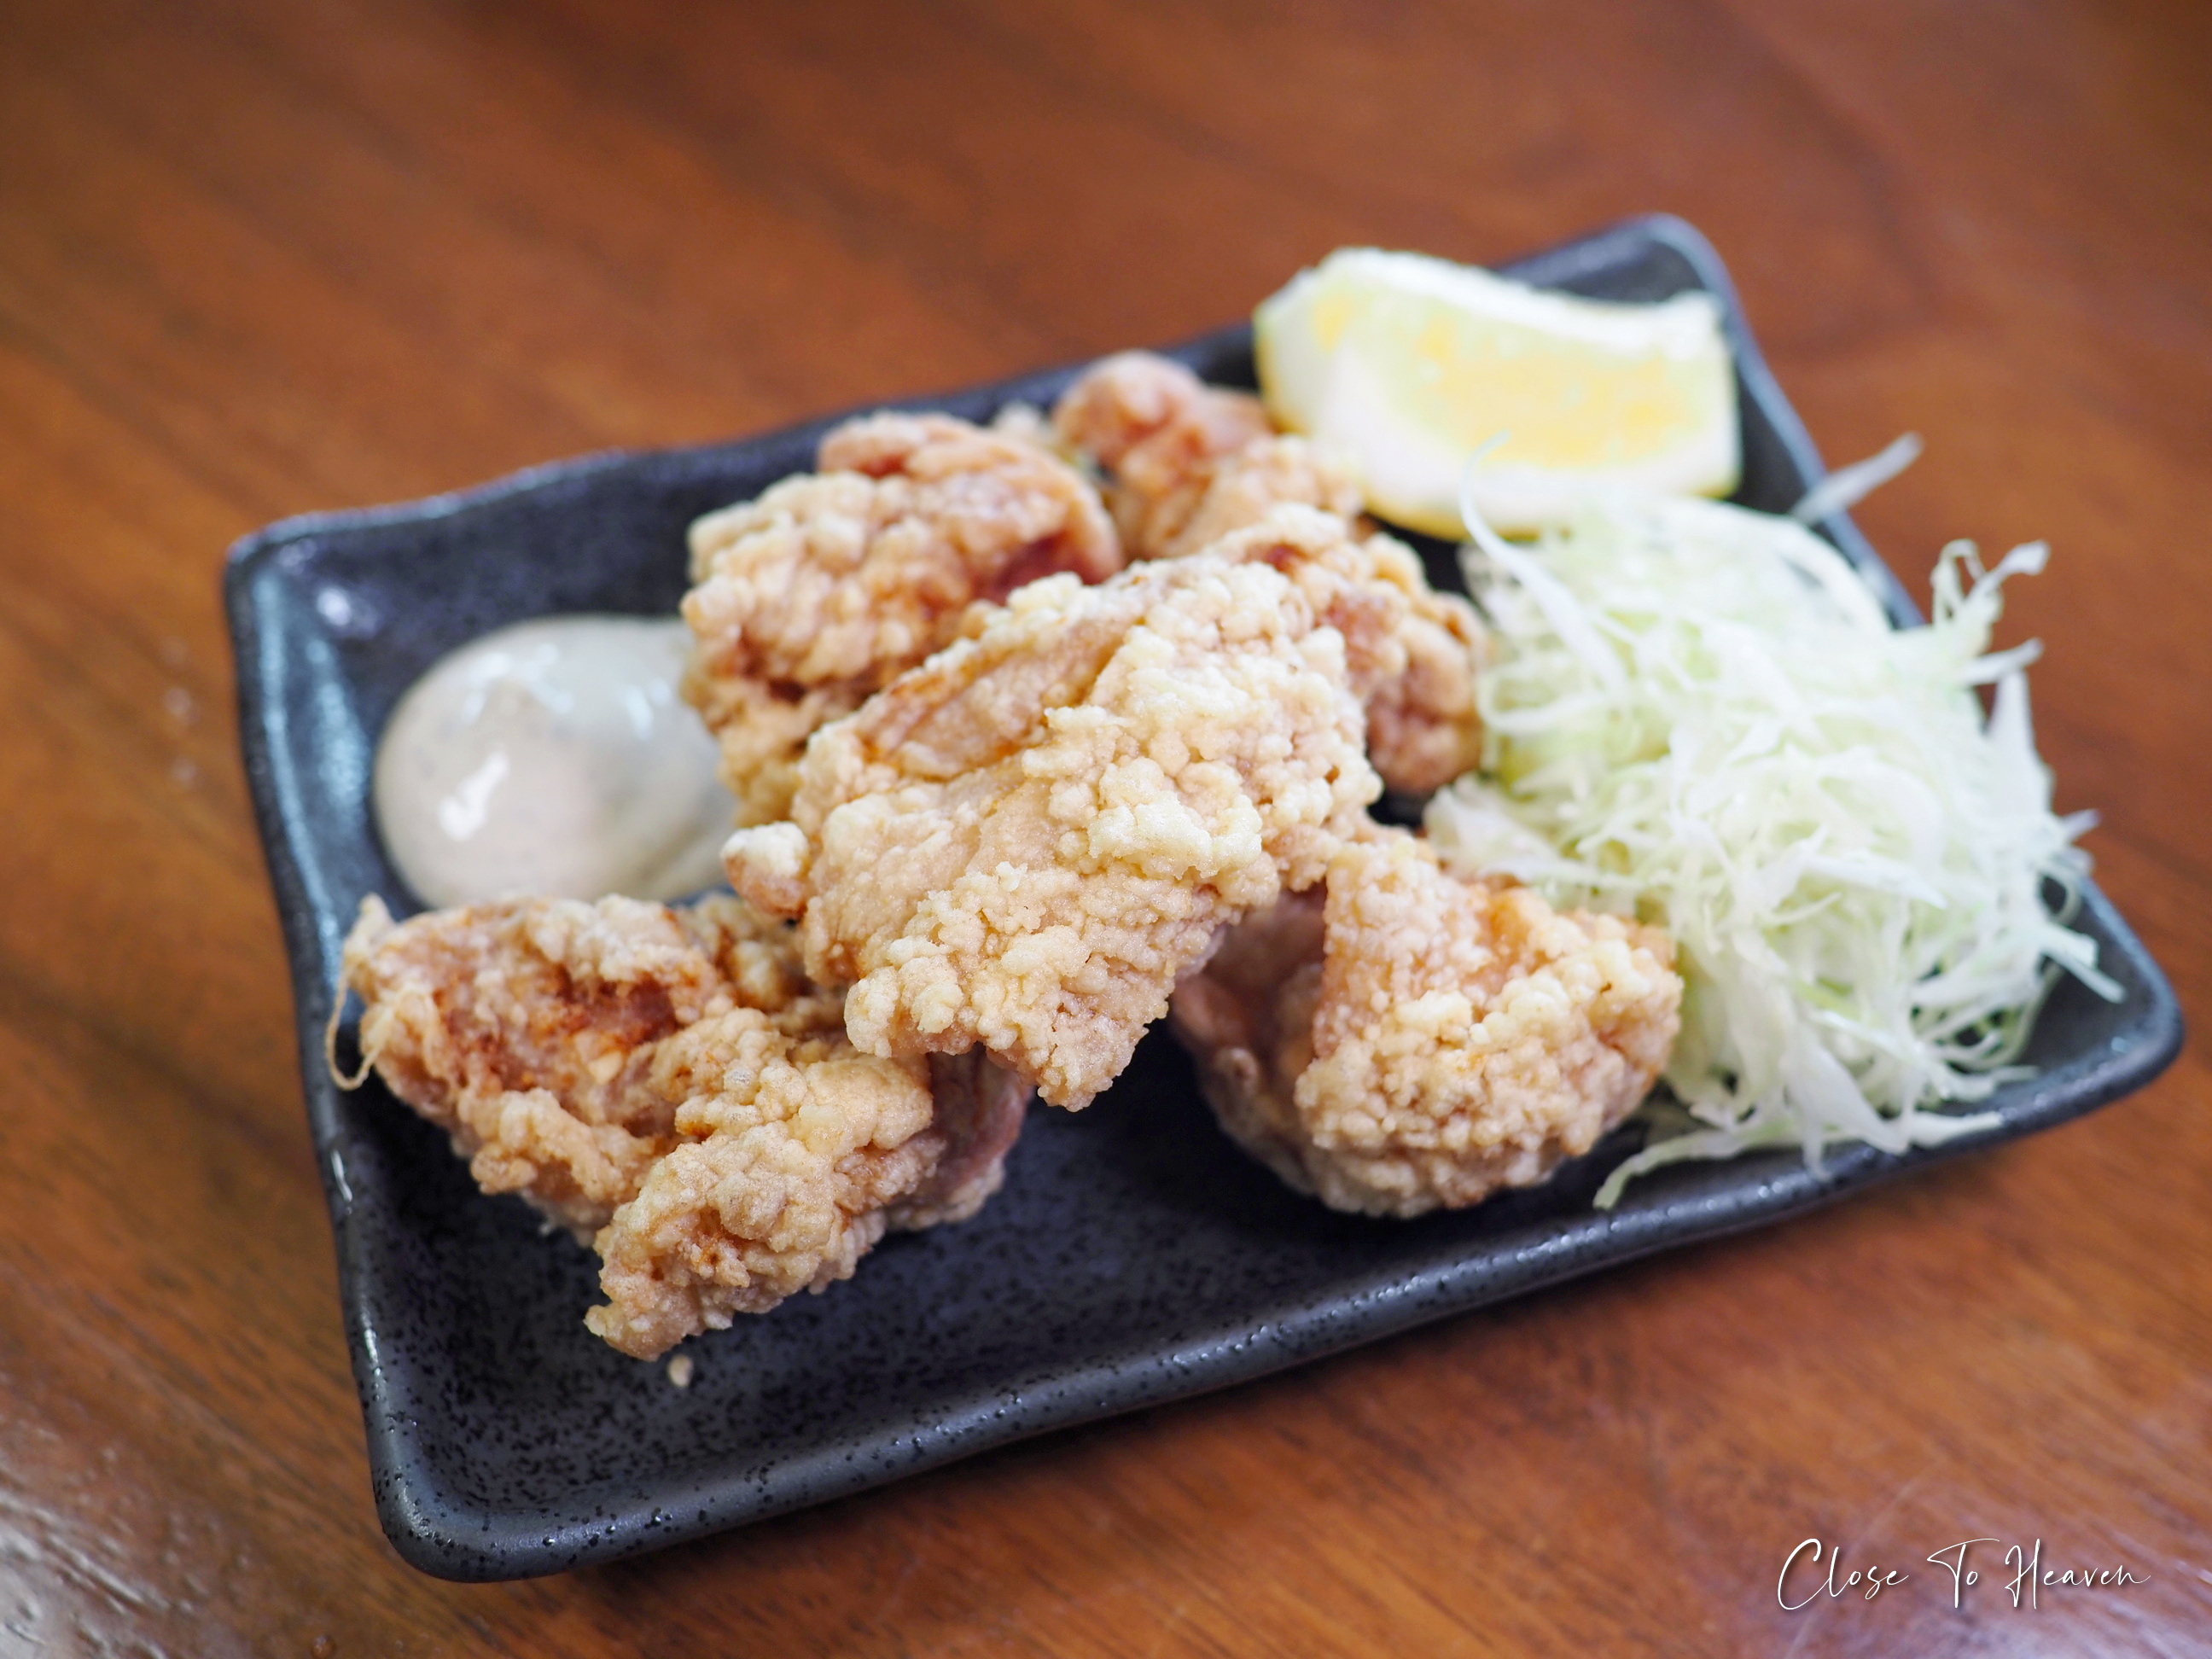 All-you-can-eat อาหารญี่ปุ่น | Ki Izakaya